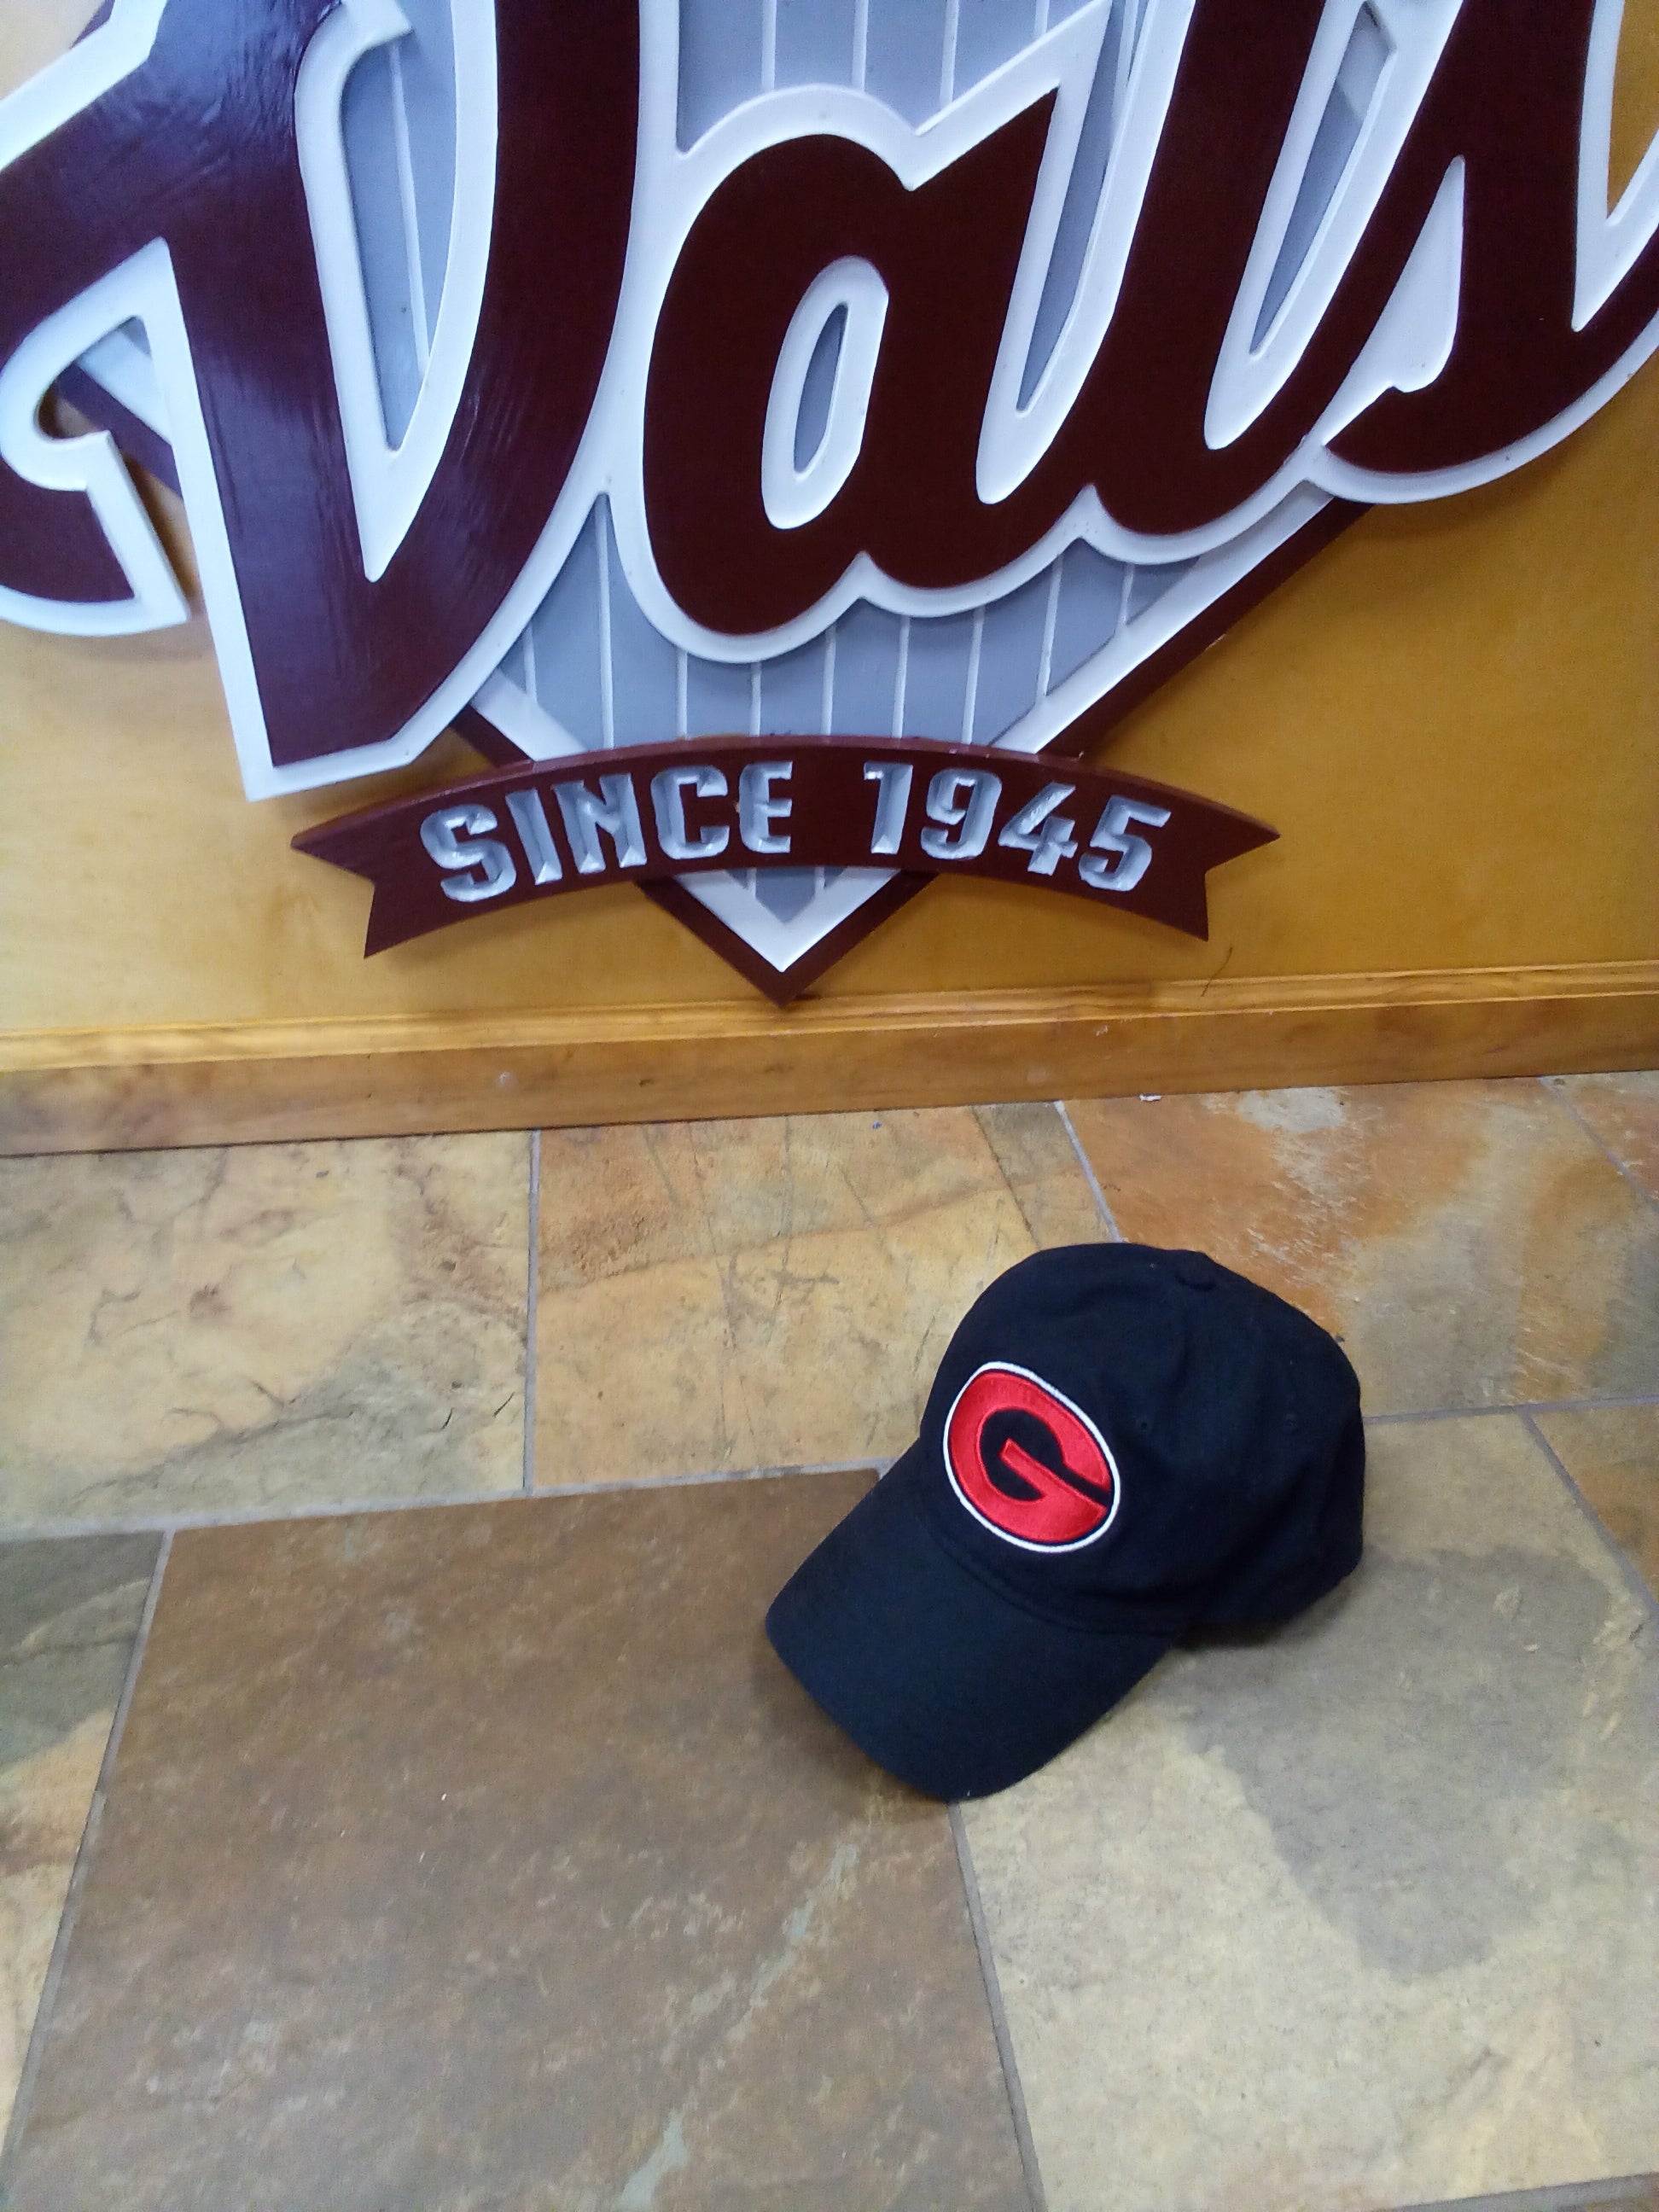 CLEARANCE - Guilderland Adjustable Baseball Hat – Val's Sporting Goods